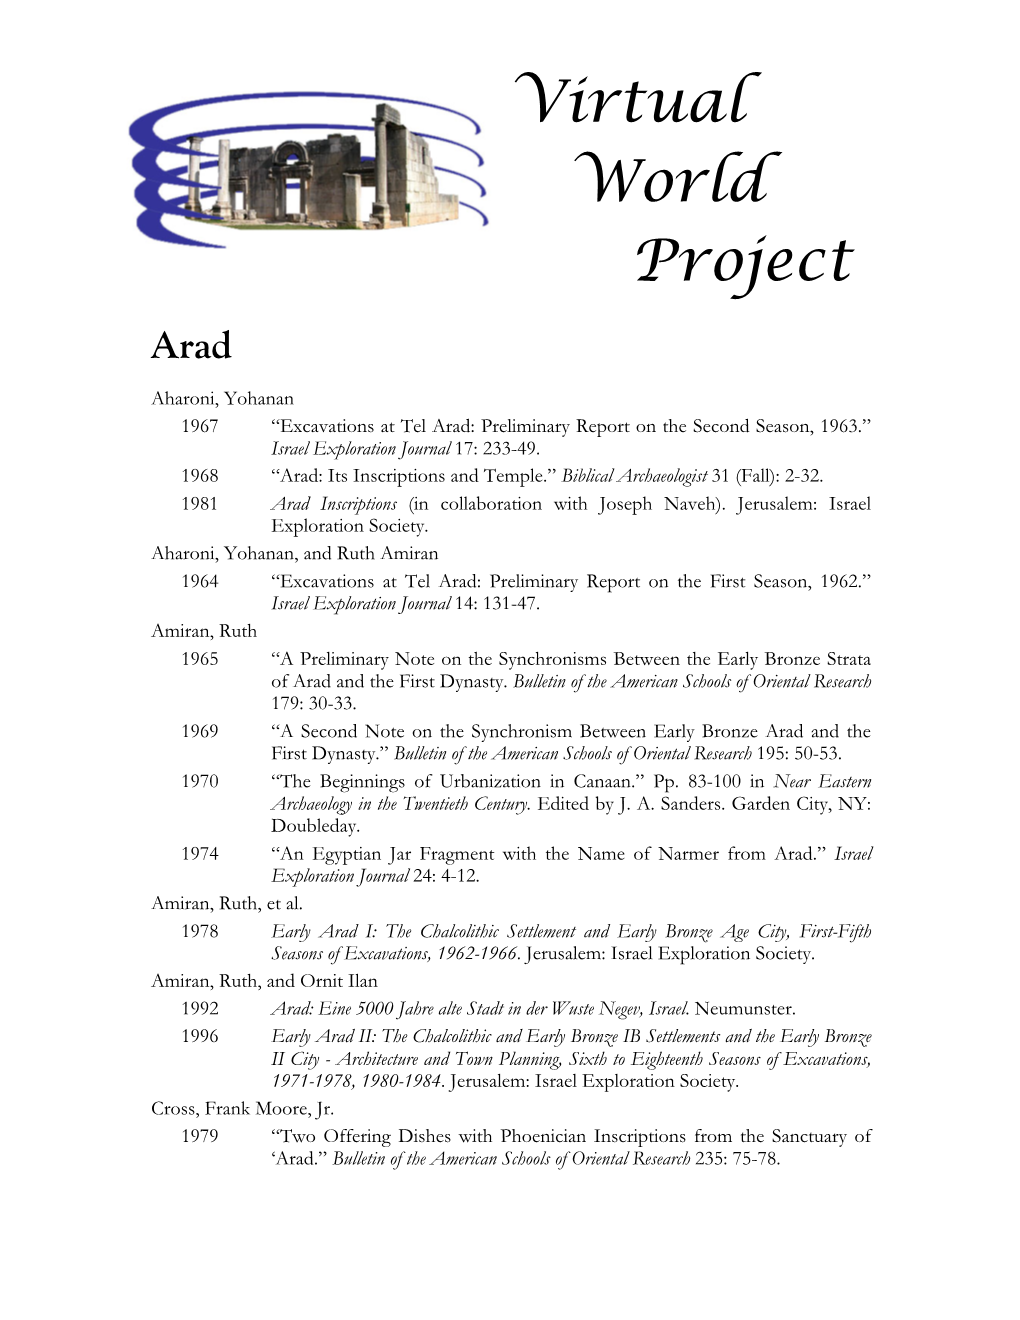 Virtual World Project Arad